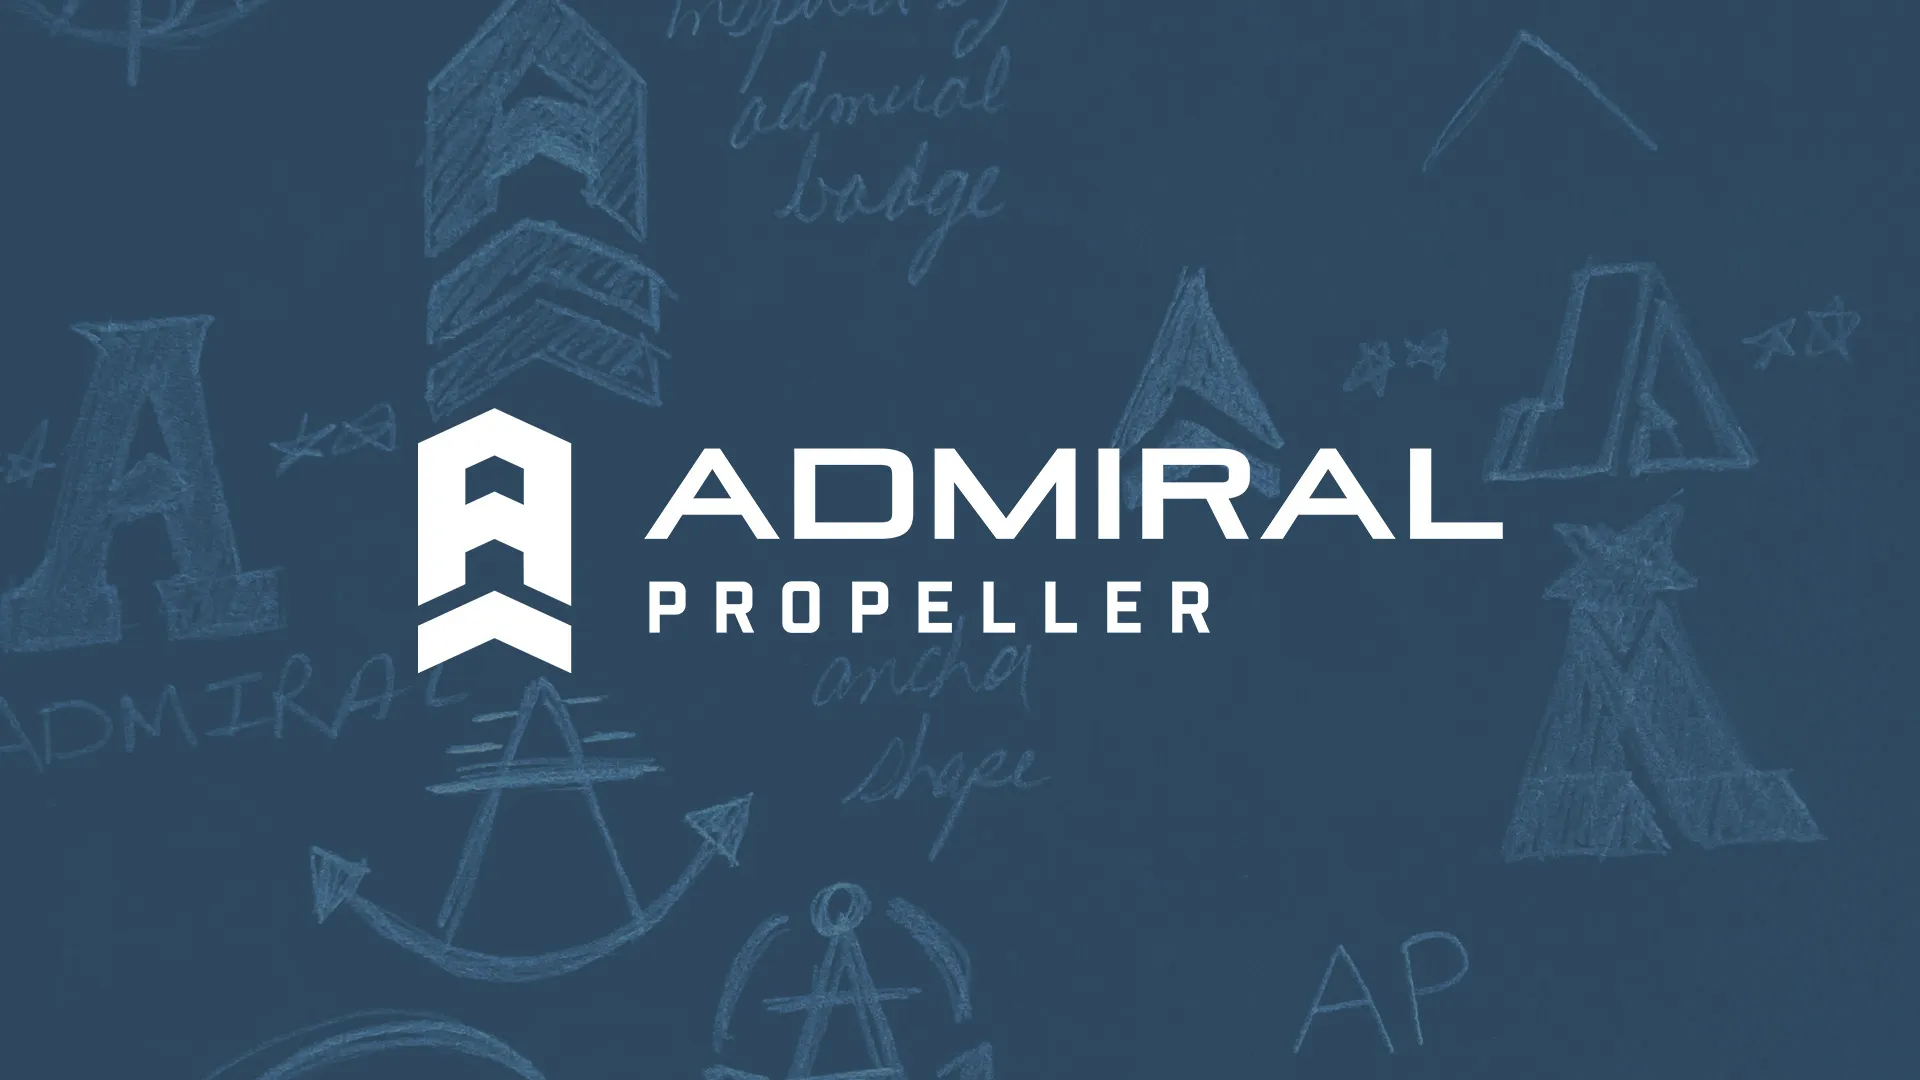 Admiral Propeller new logo